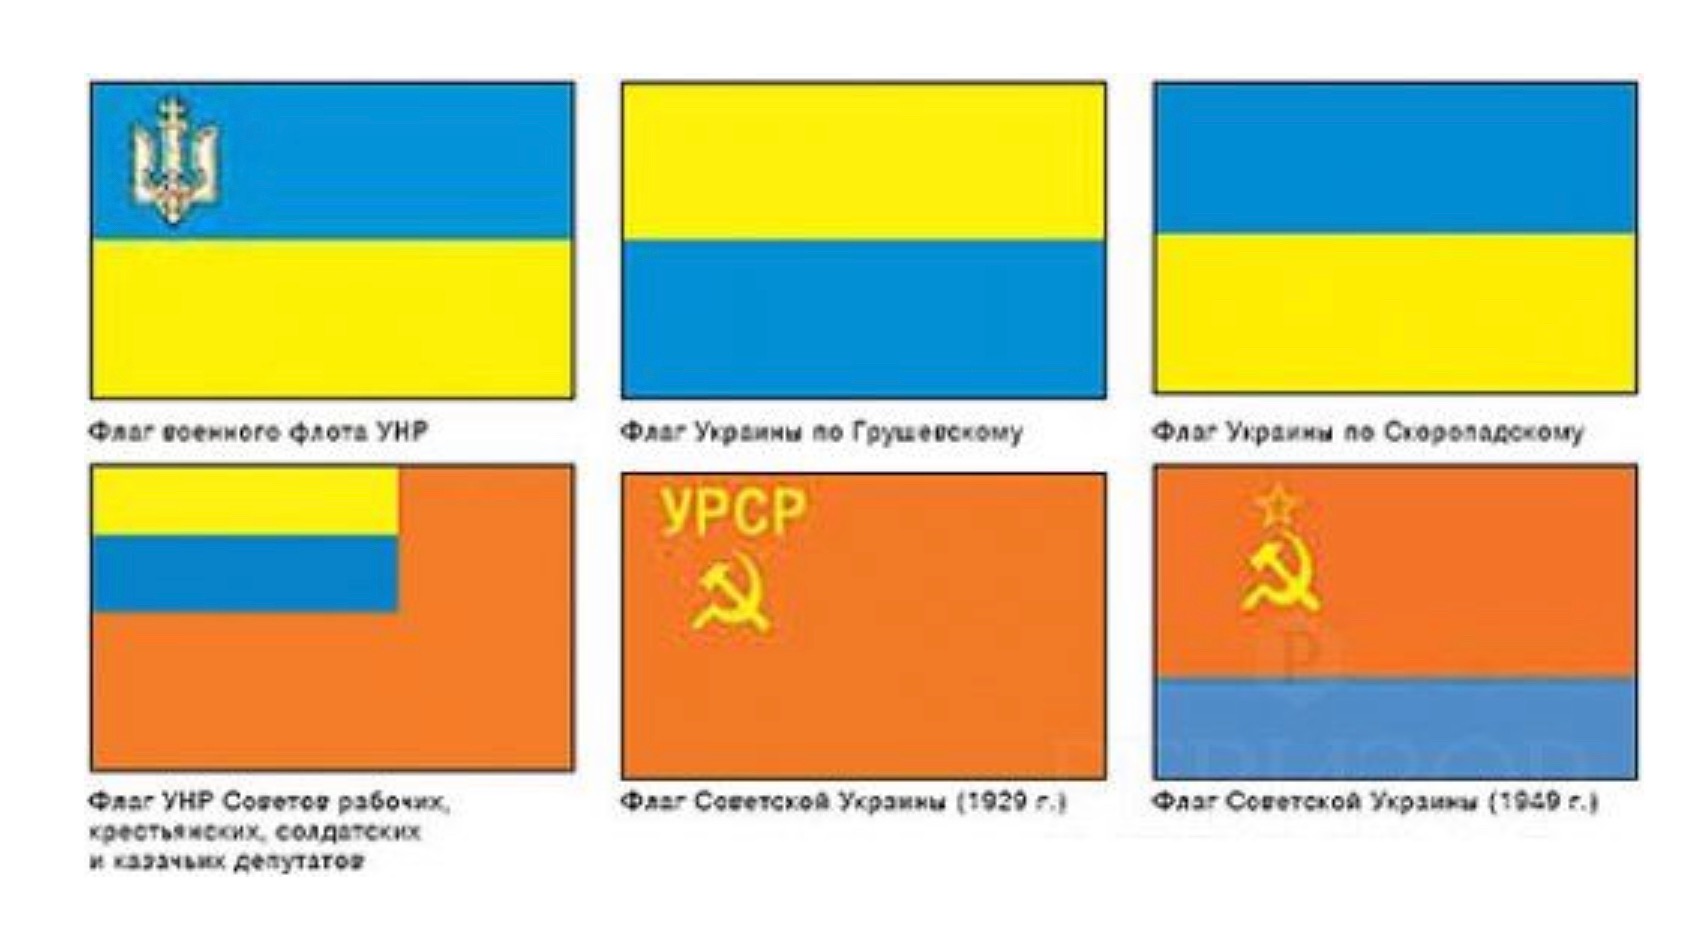 Флаг синий желтый с гербом. Желто-голубой флаг УНР. Флаг Украины до 1917 года. Флаг Украины до революции 1917 года. Жёлто-синий флаг УНР.